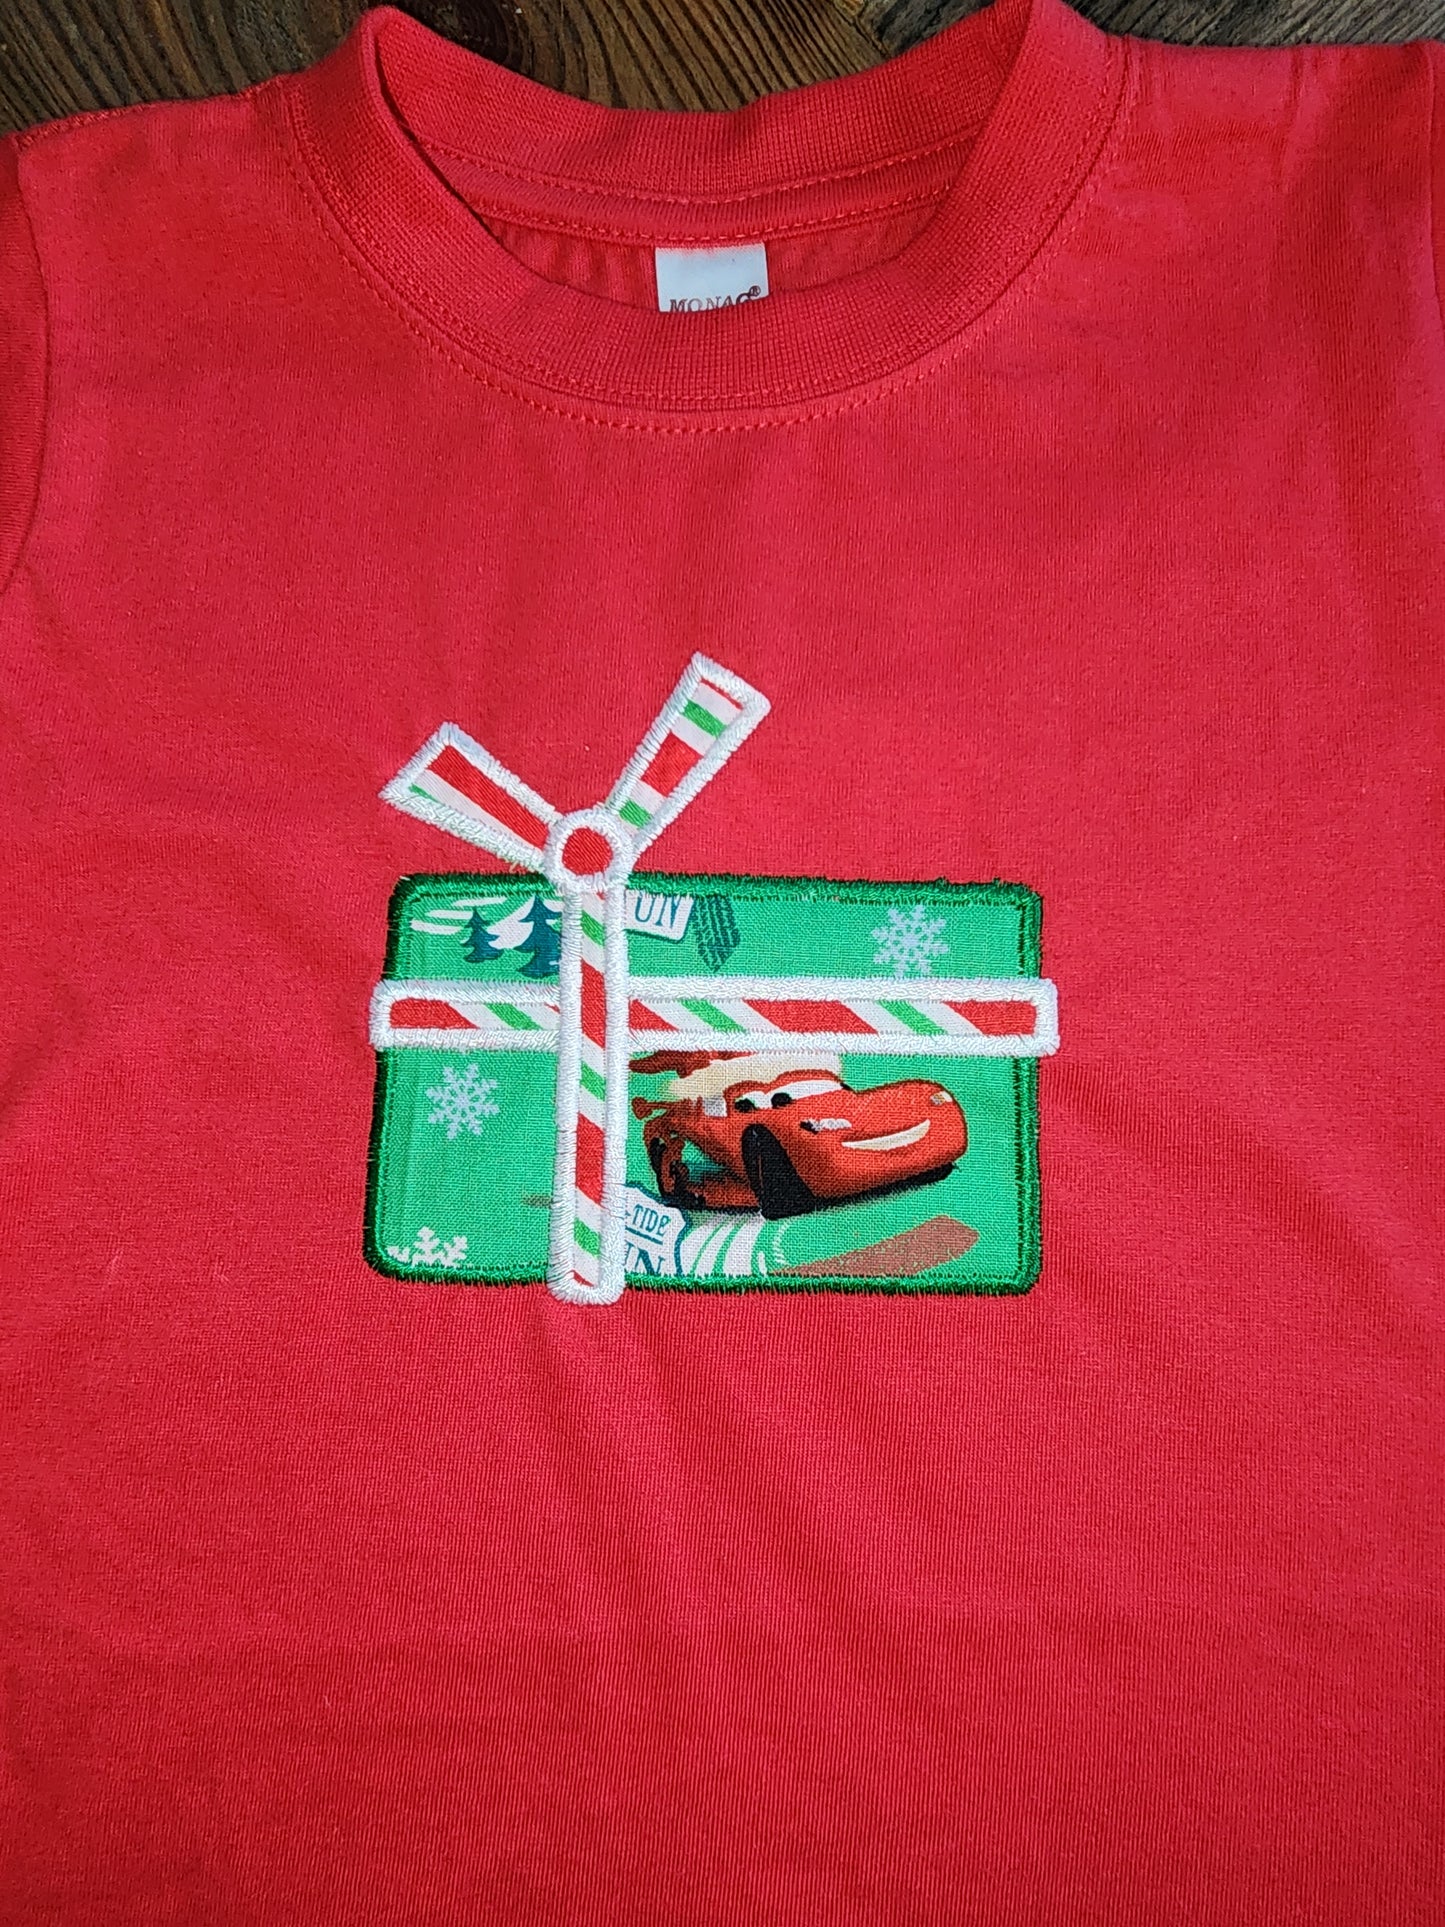 Cars Lightning McQueen Size 18m Christmas Shirt